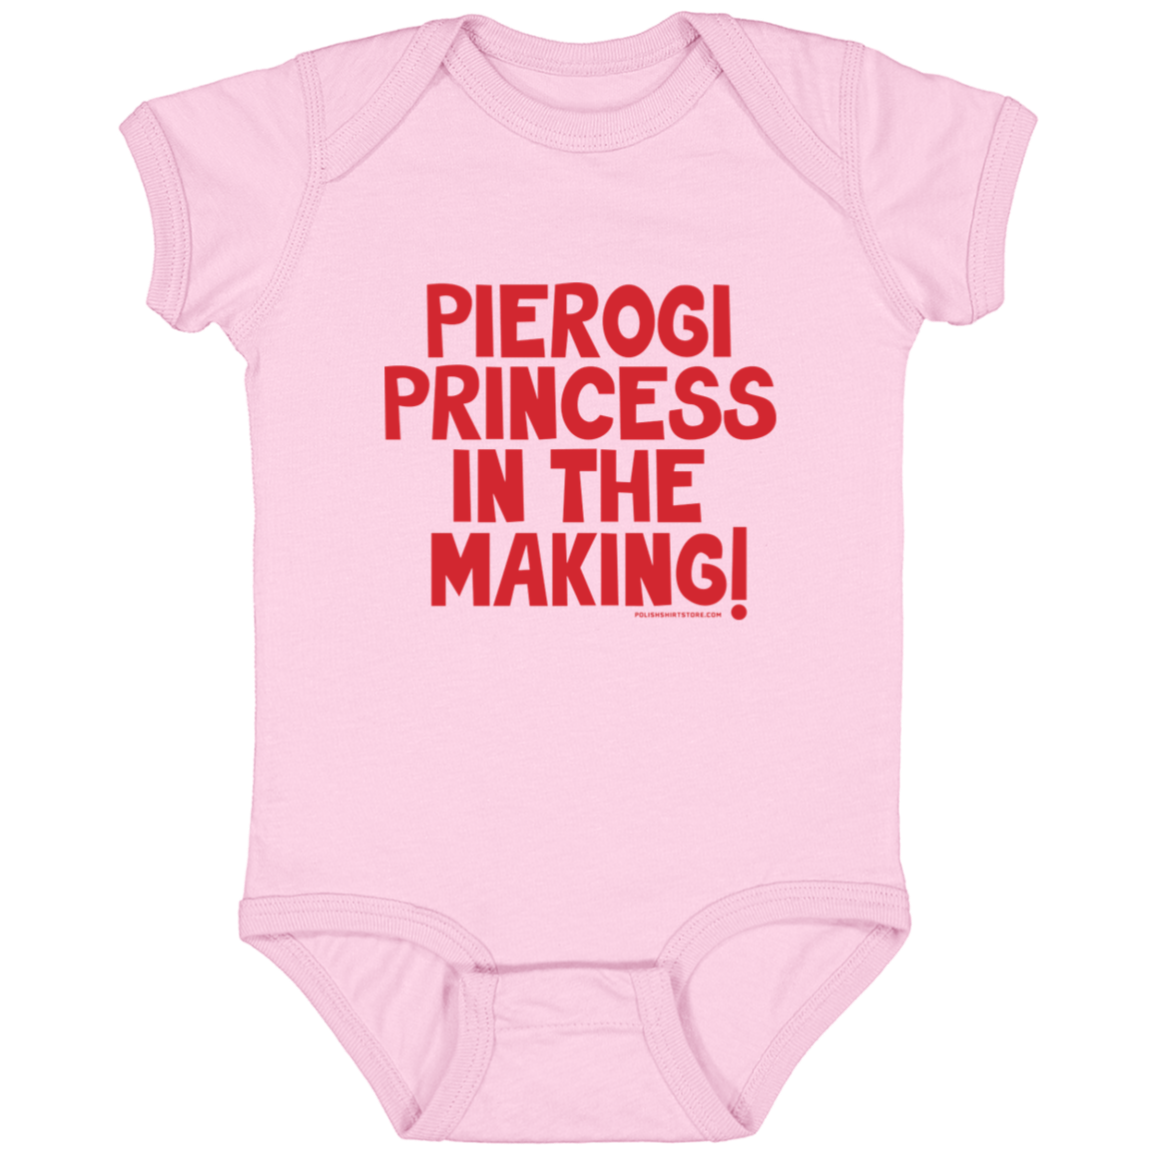 Pierogi Princess In The Making Infant Bodysuit Baby CustomCat Pink Newborn 